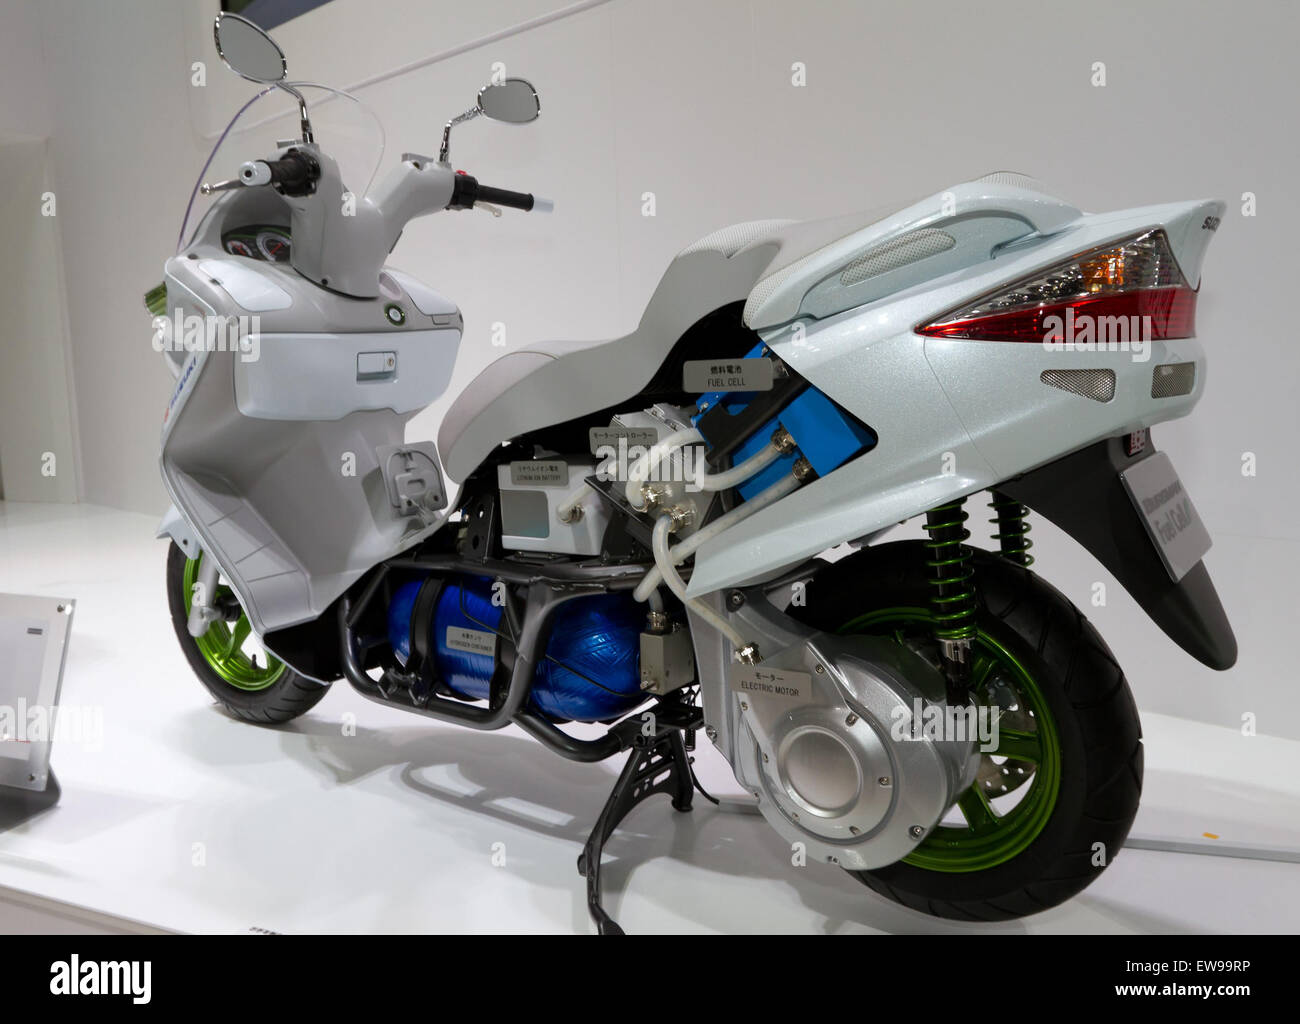 Suzuki Burgman Fuel Cell cutaway model 2011 Tokyo Motor Show Stock Photo